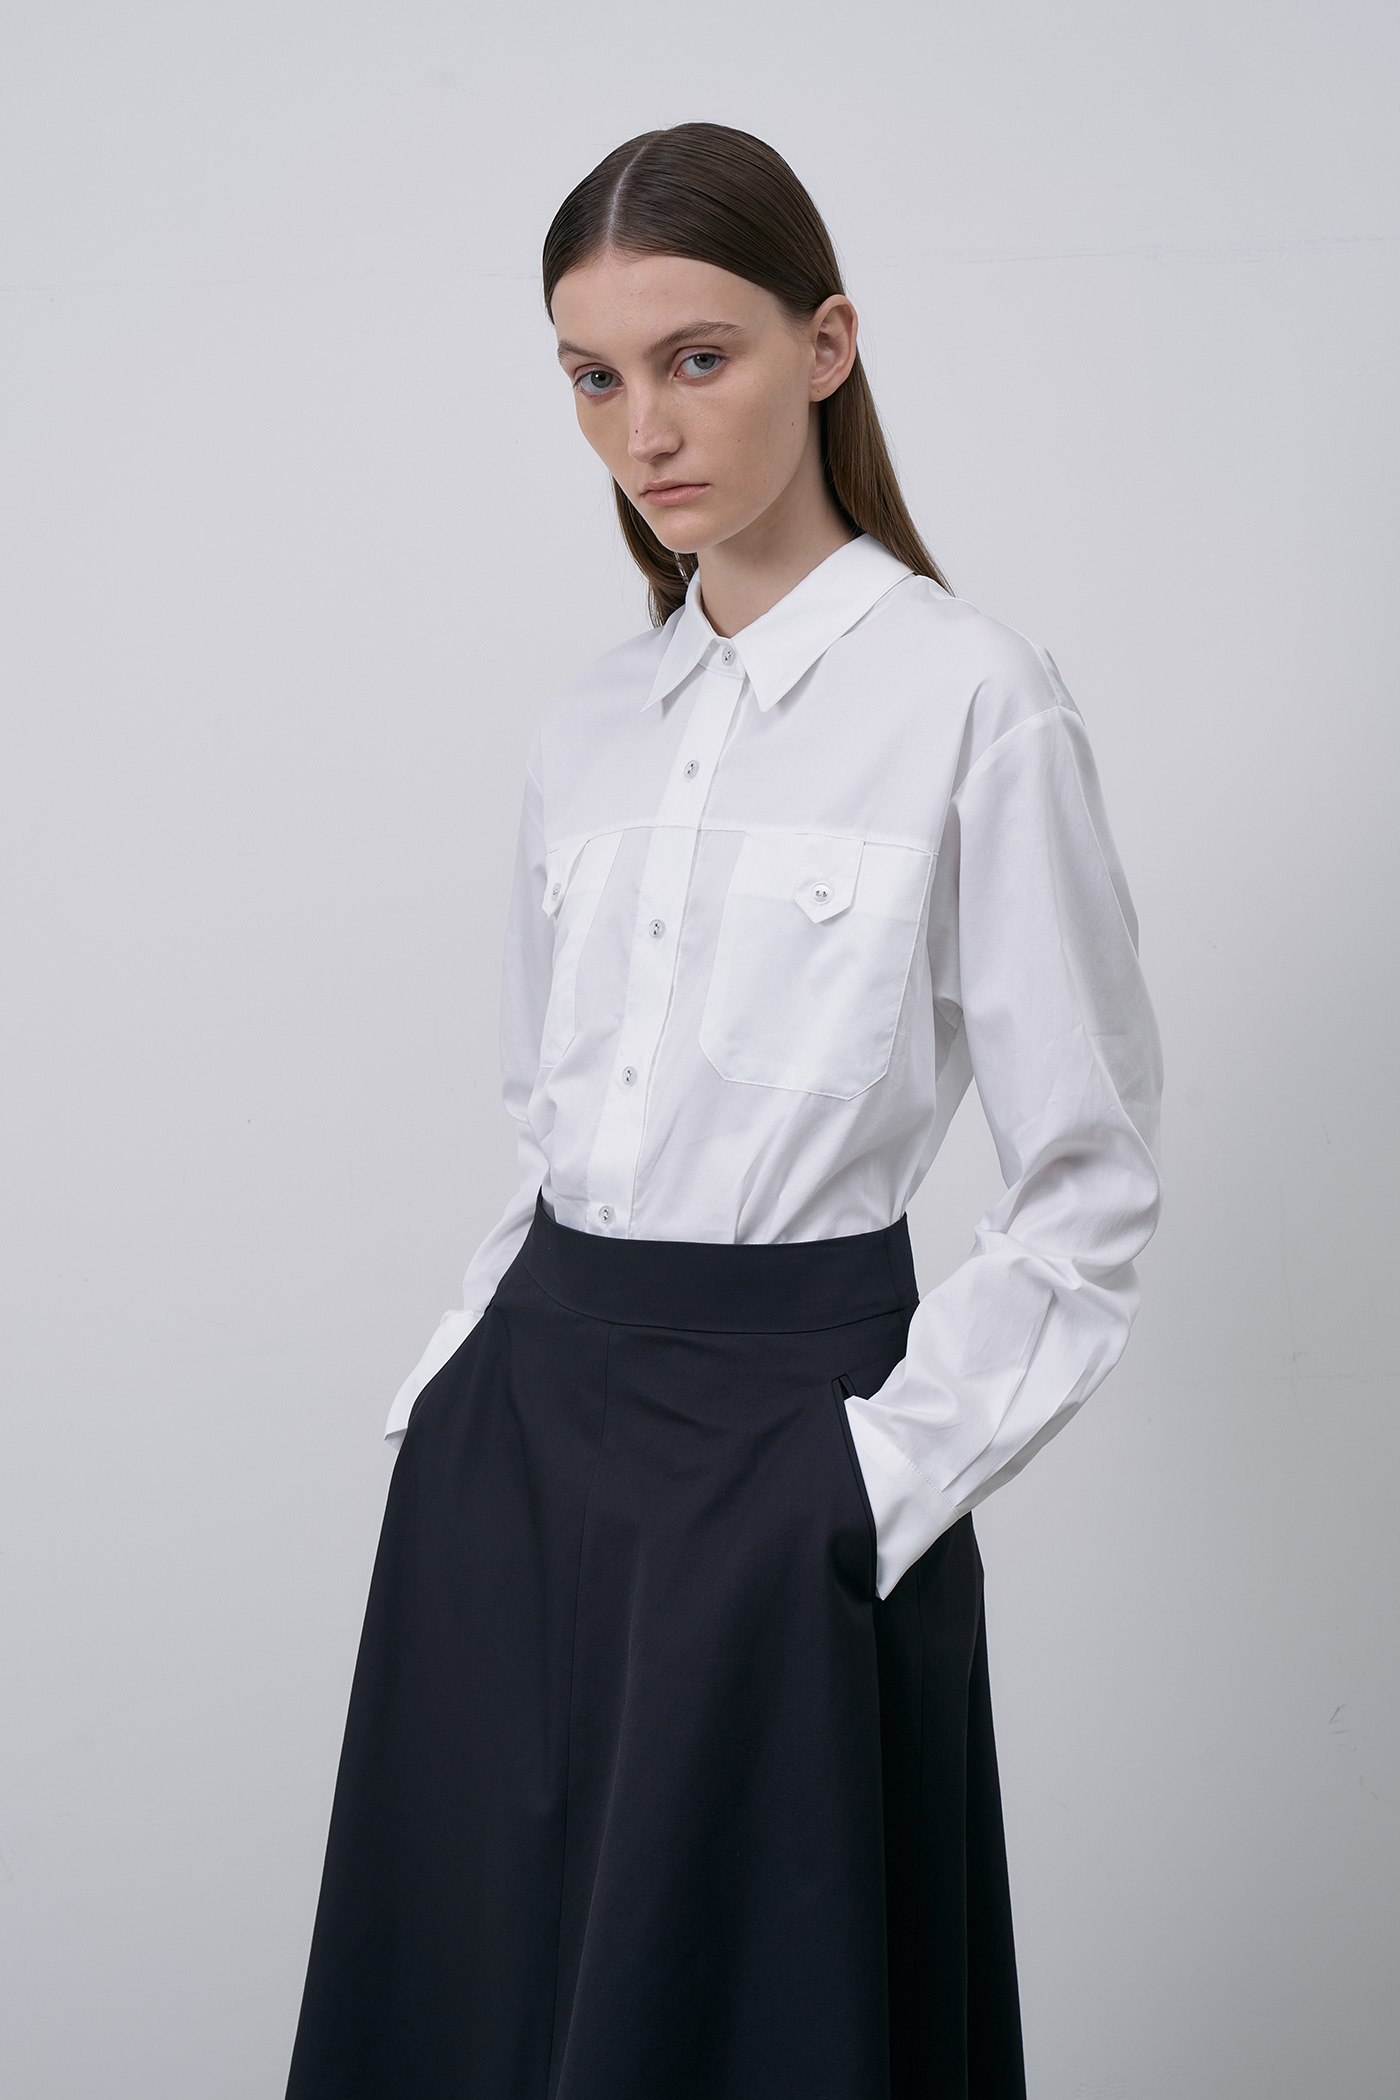 [SAMPLE]Cotton Pocket Shirt-White